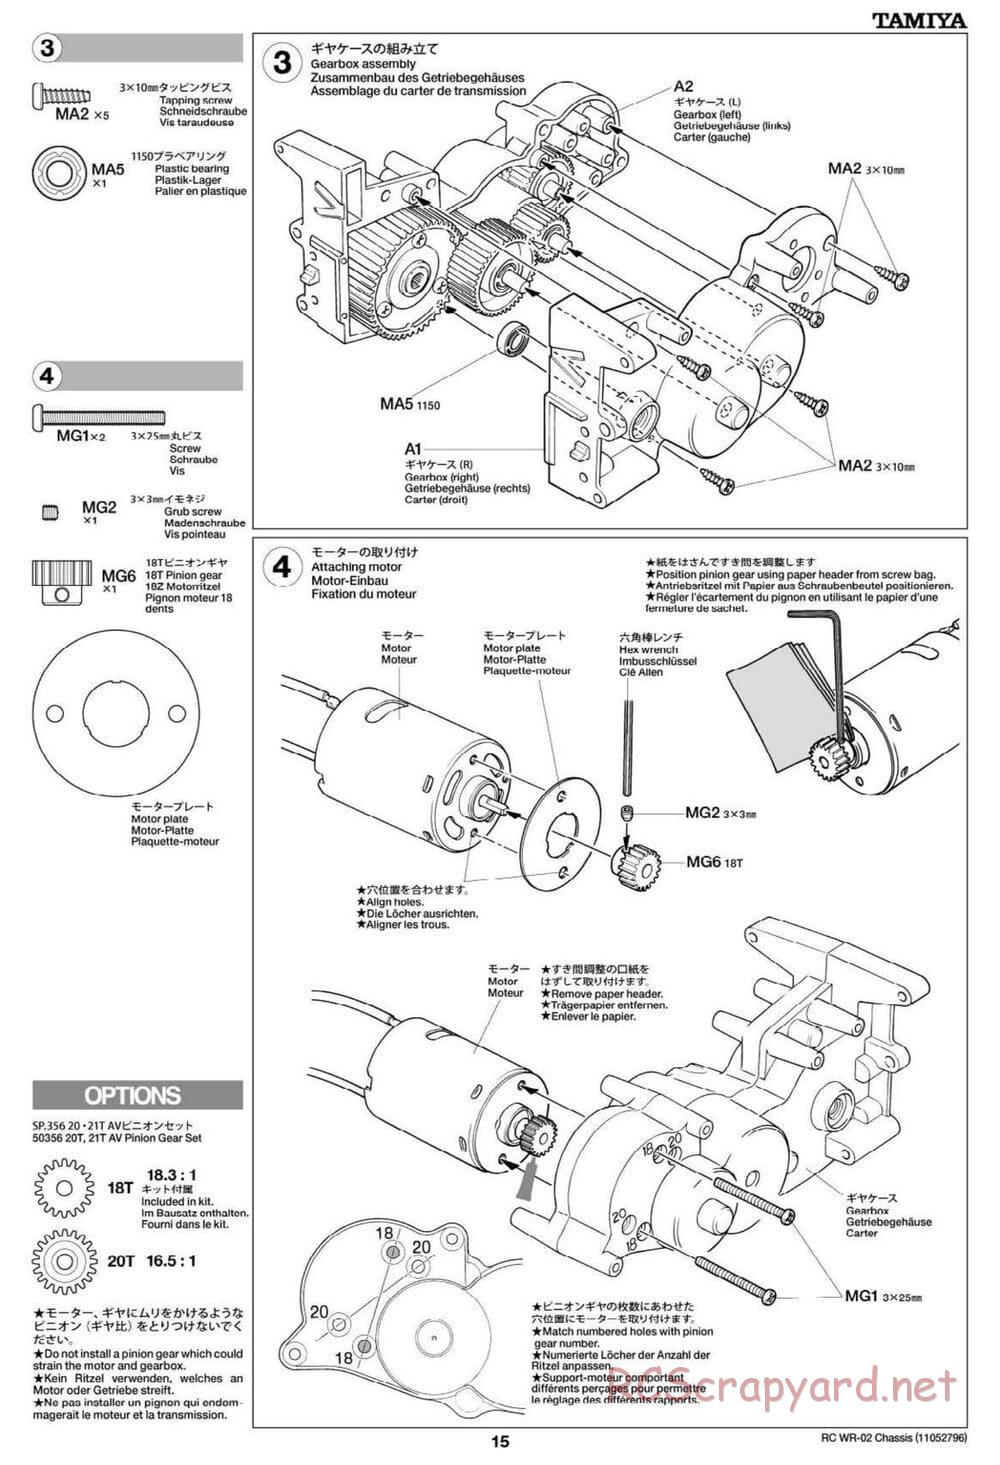 Tamiya - WR-02 Chassis - Manual - Page 15